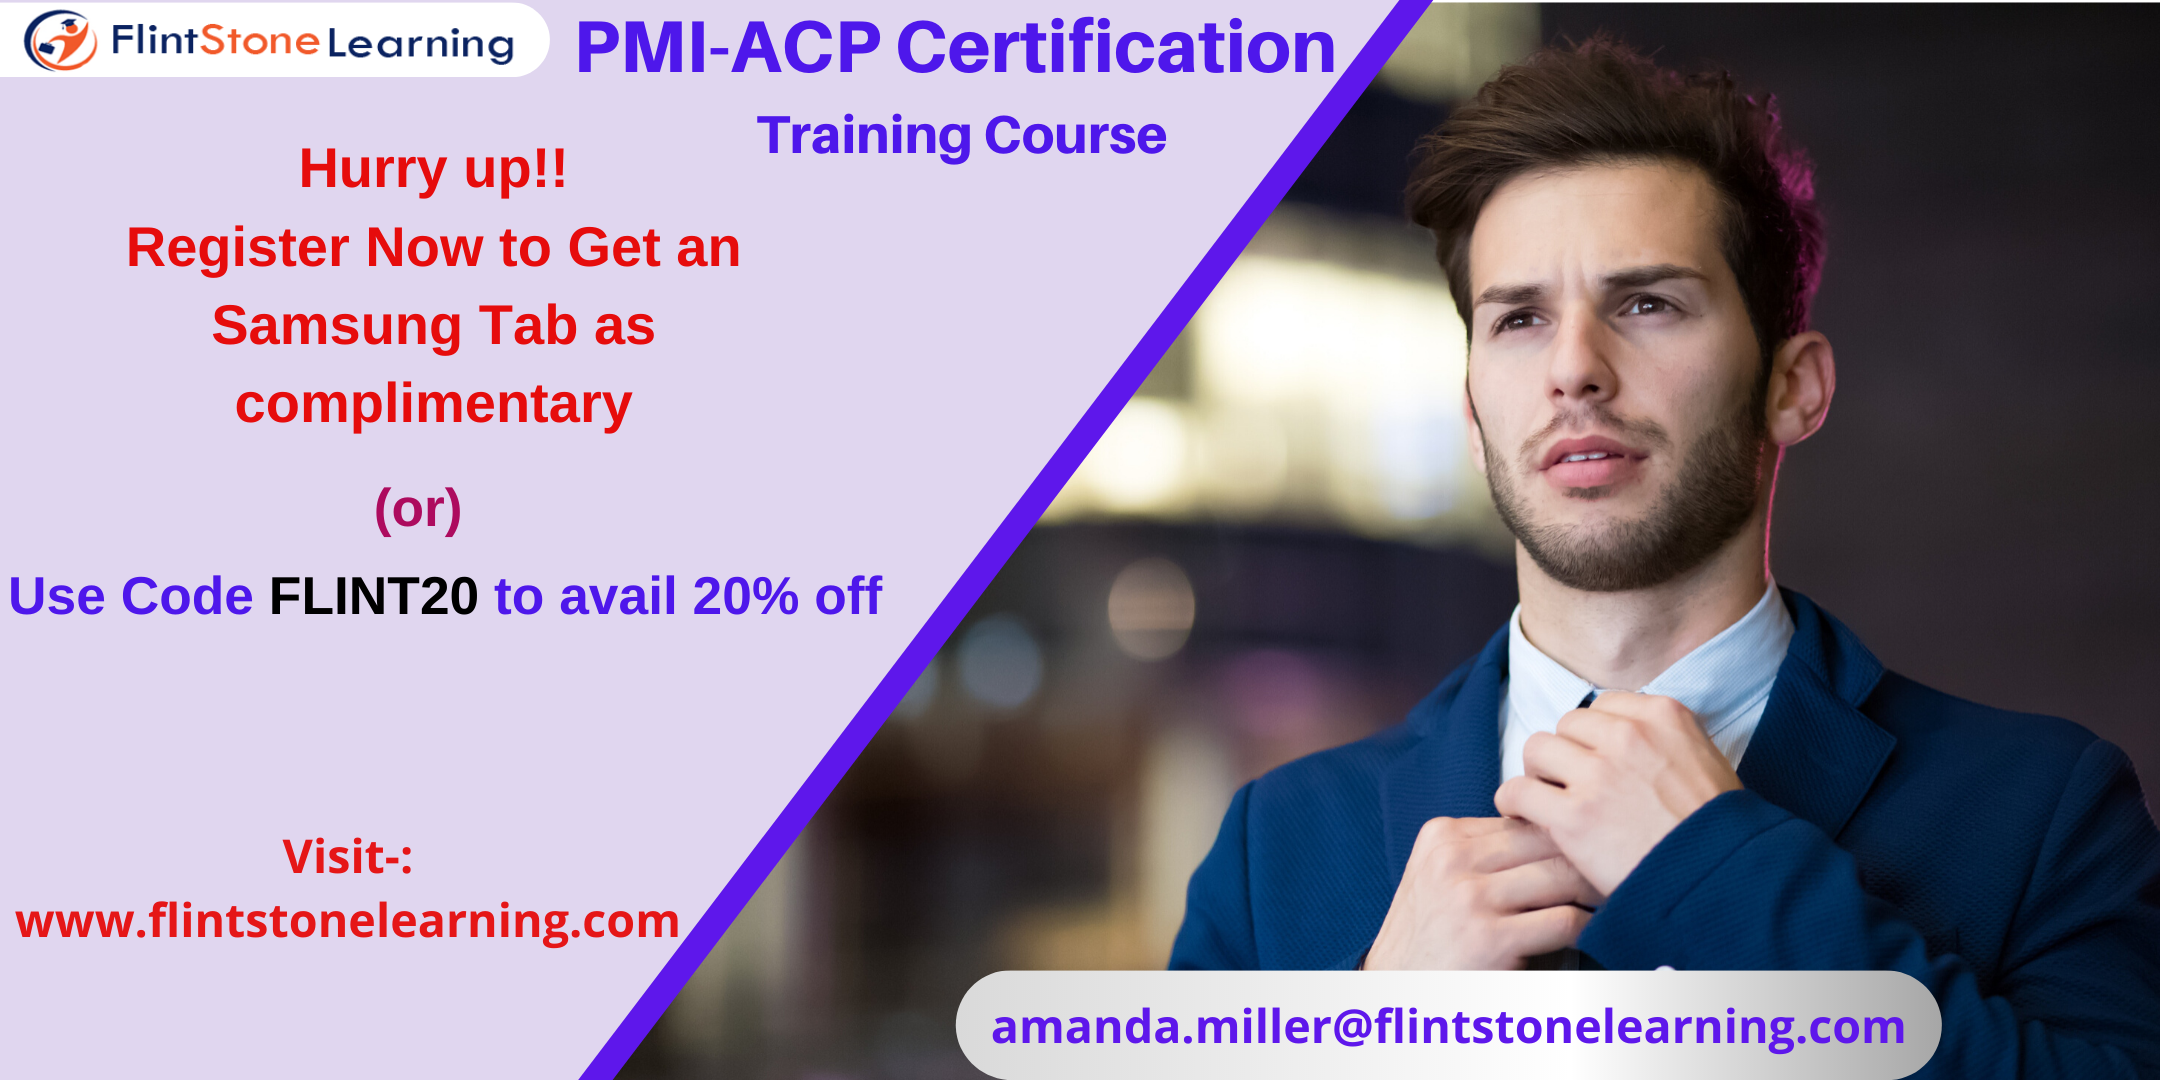 PMI-ACP Certification Training Course in Clovis, CA